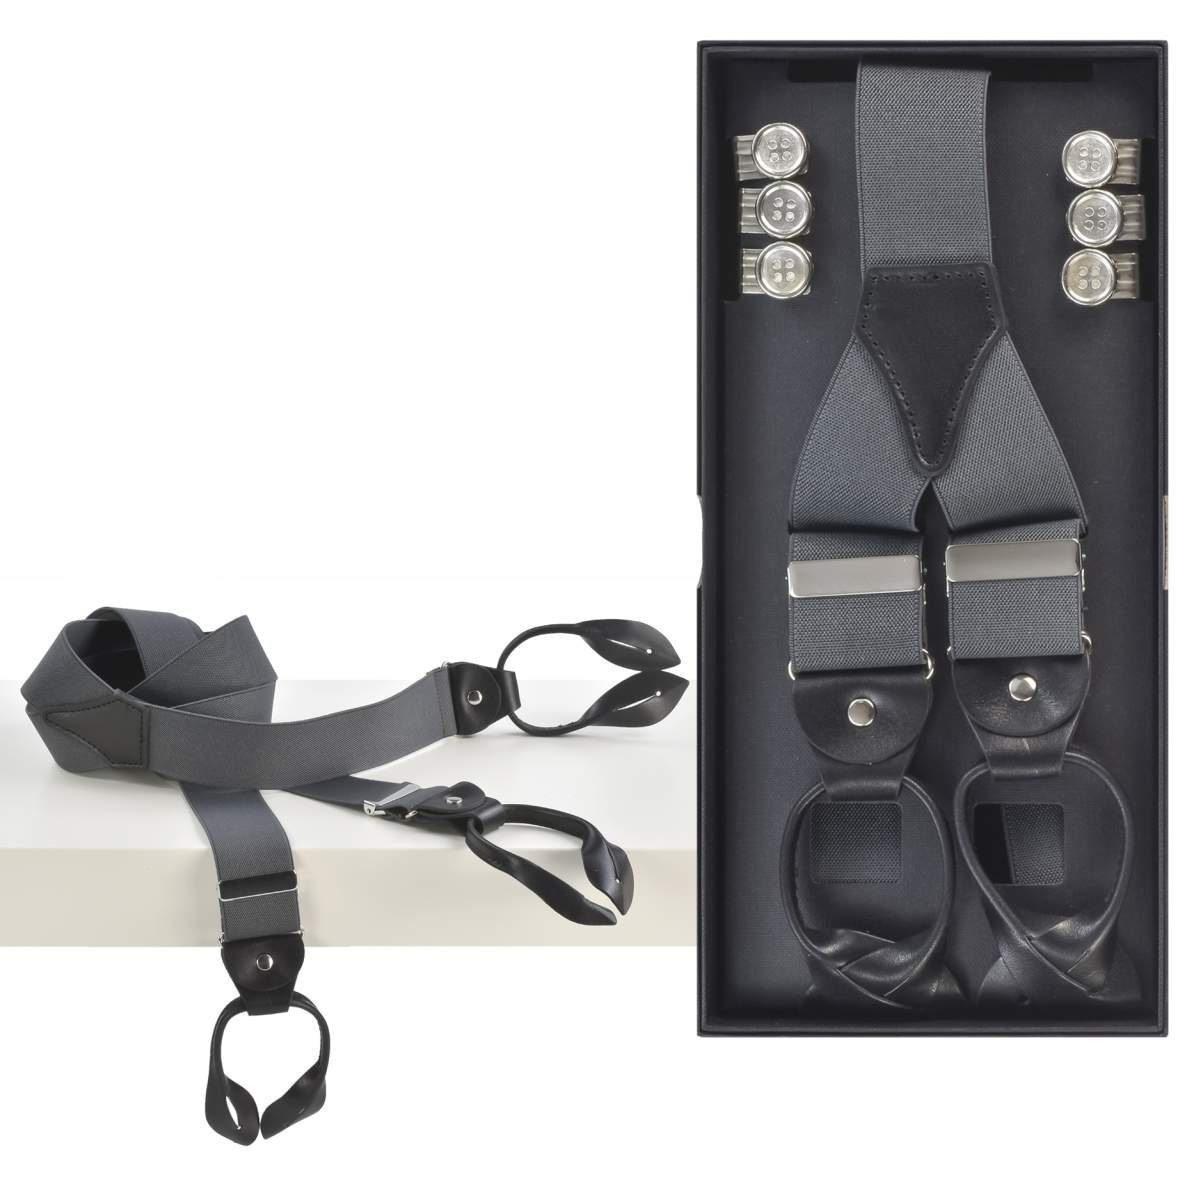 LLOYD Men’s Belts Hosenträger Casuals Holländer, mit Hosenclips, 35mm Bandbreite, grau, schwarze Lederparts